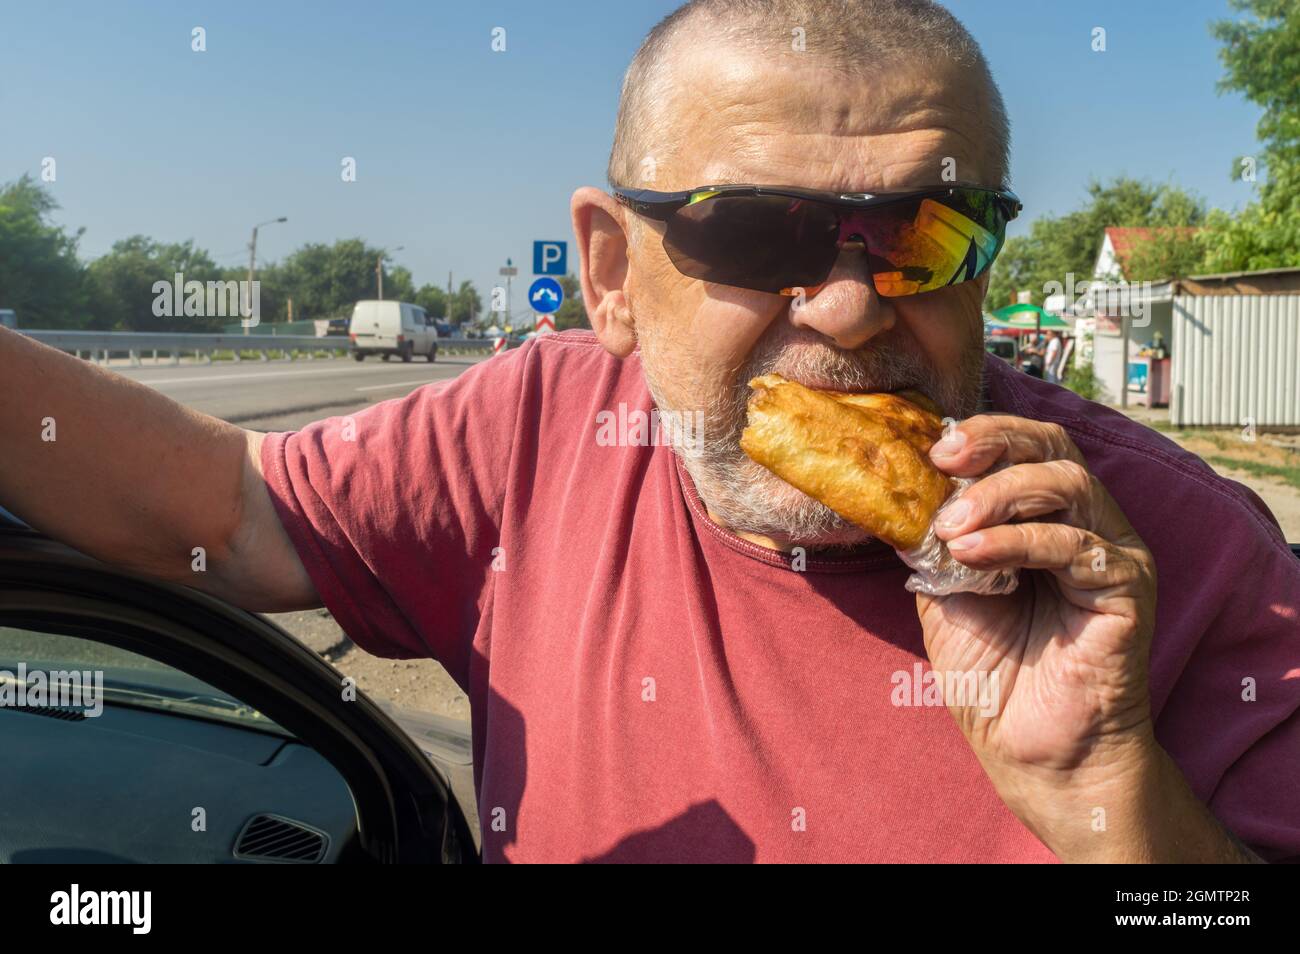 Portarait of hungry Cacasiam senior driver wearing sunglasses eating patty near his car standing on Ukrainian road Stock Photo